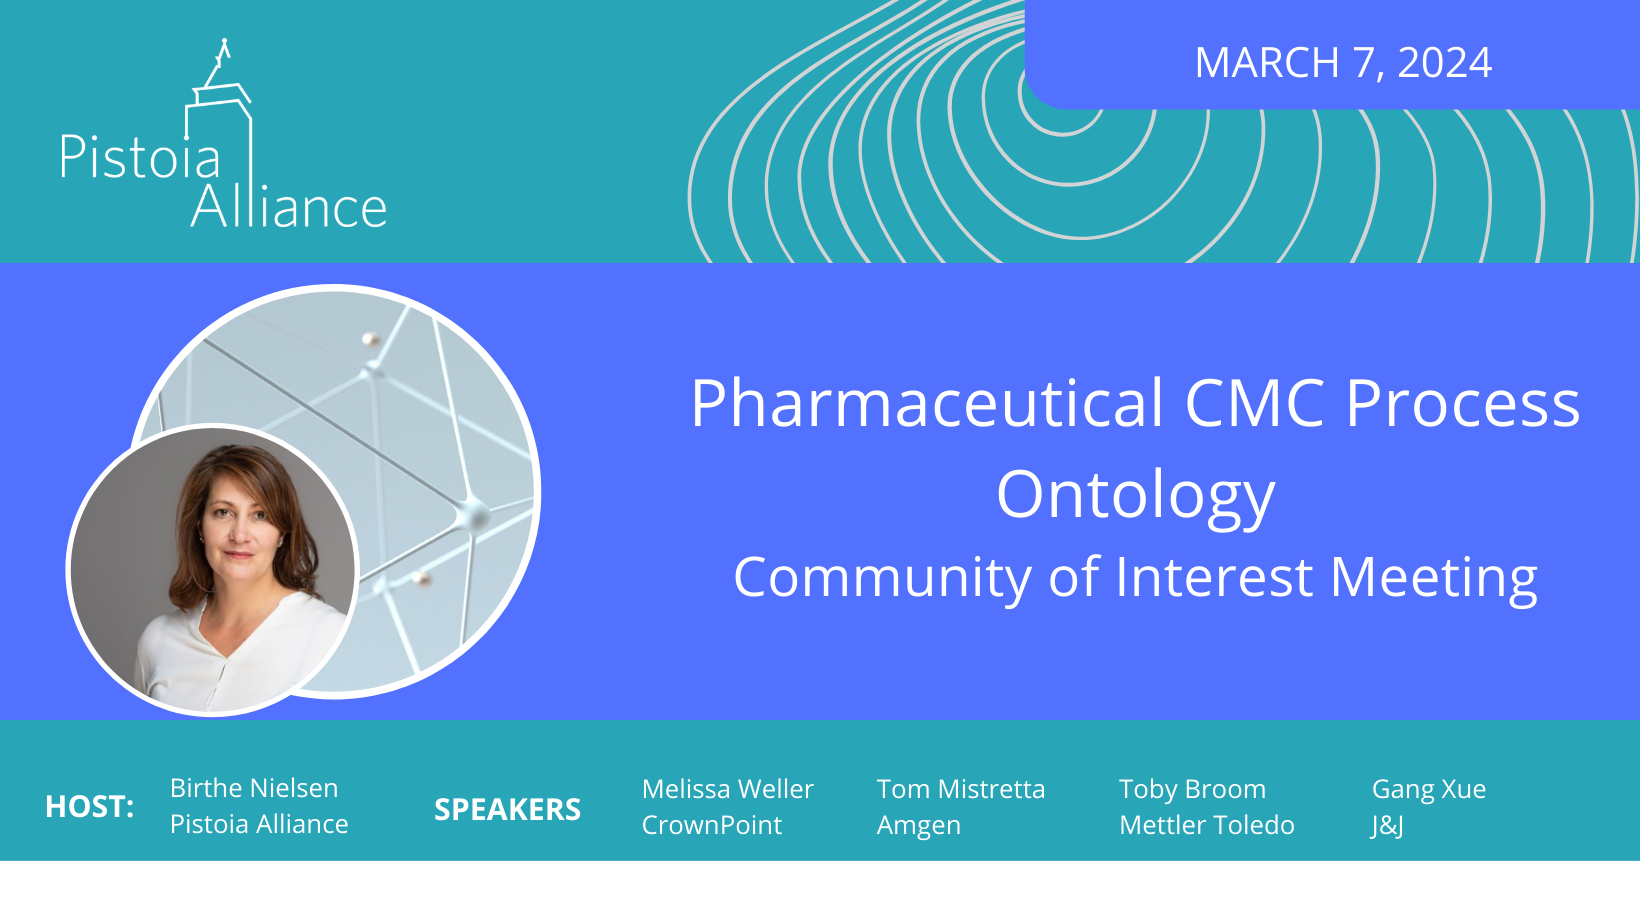 Pharmaceutical CMC Process Ontology Community of Interest Meeting